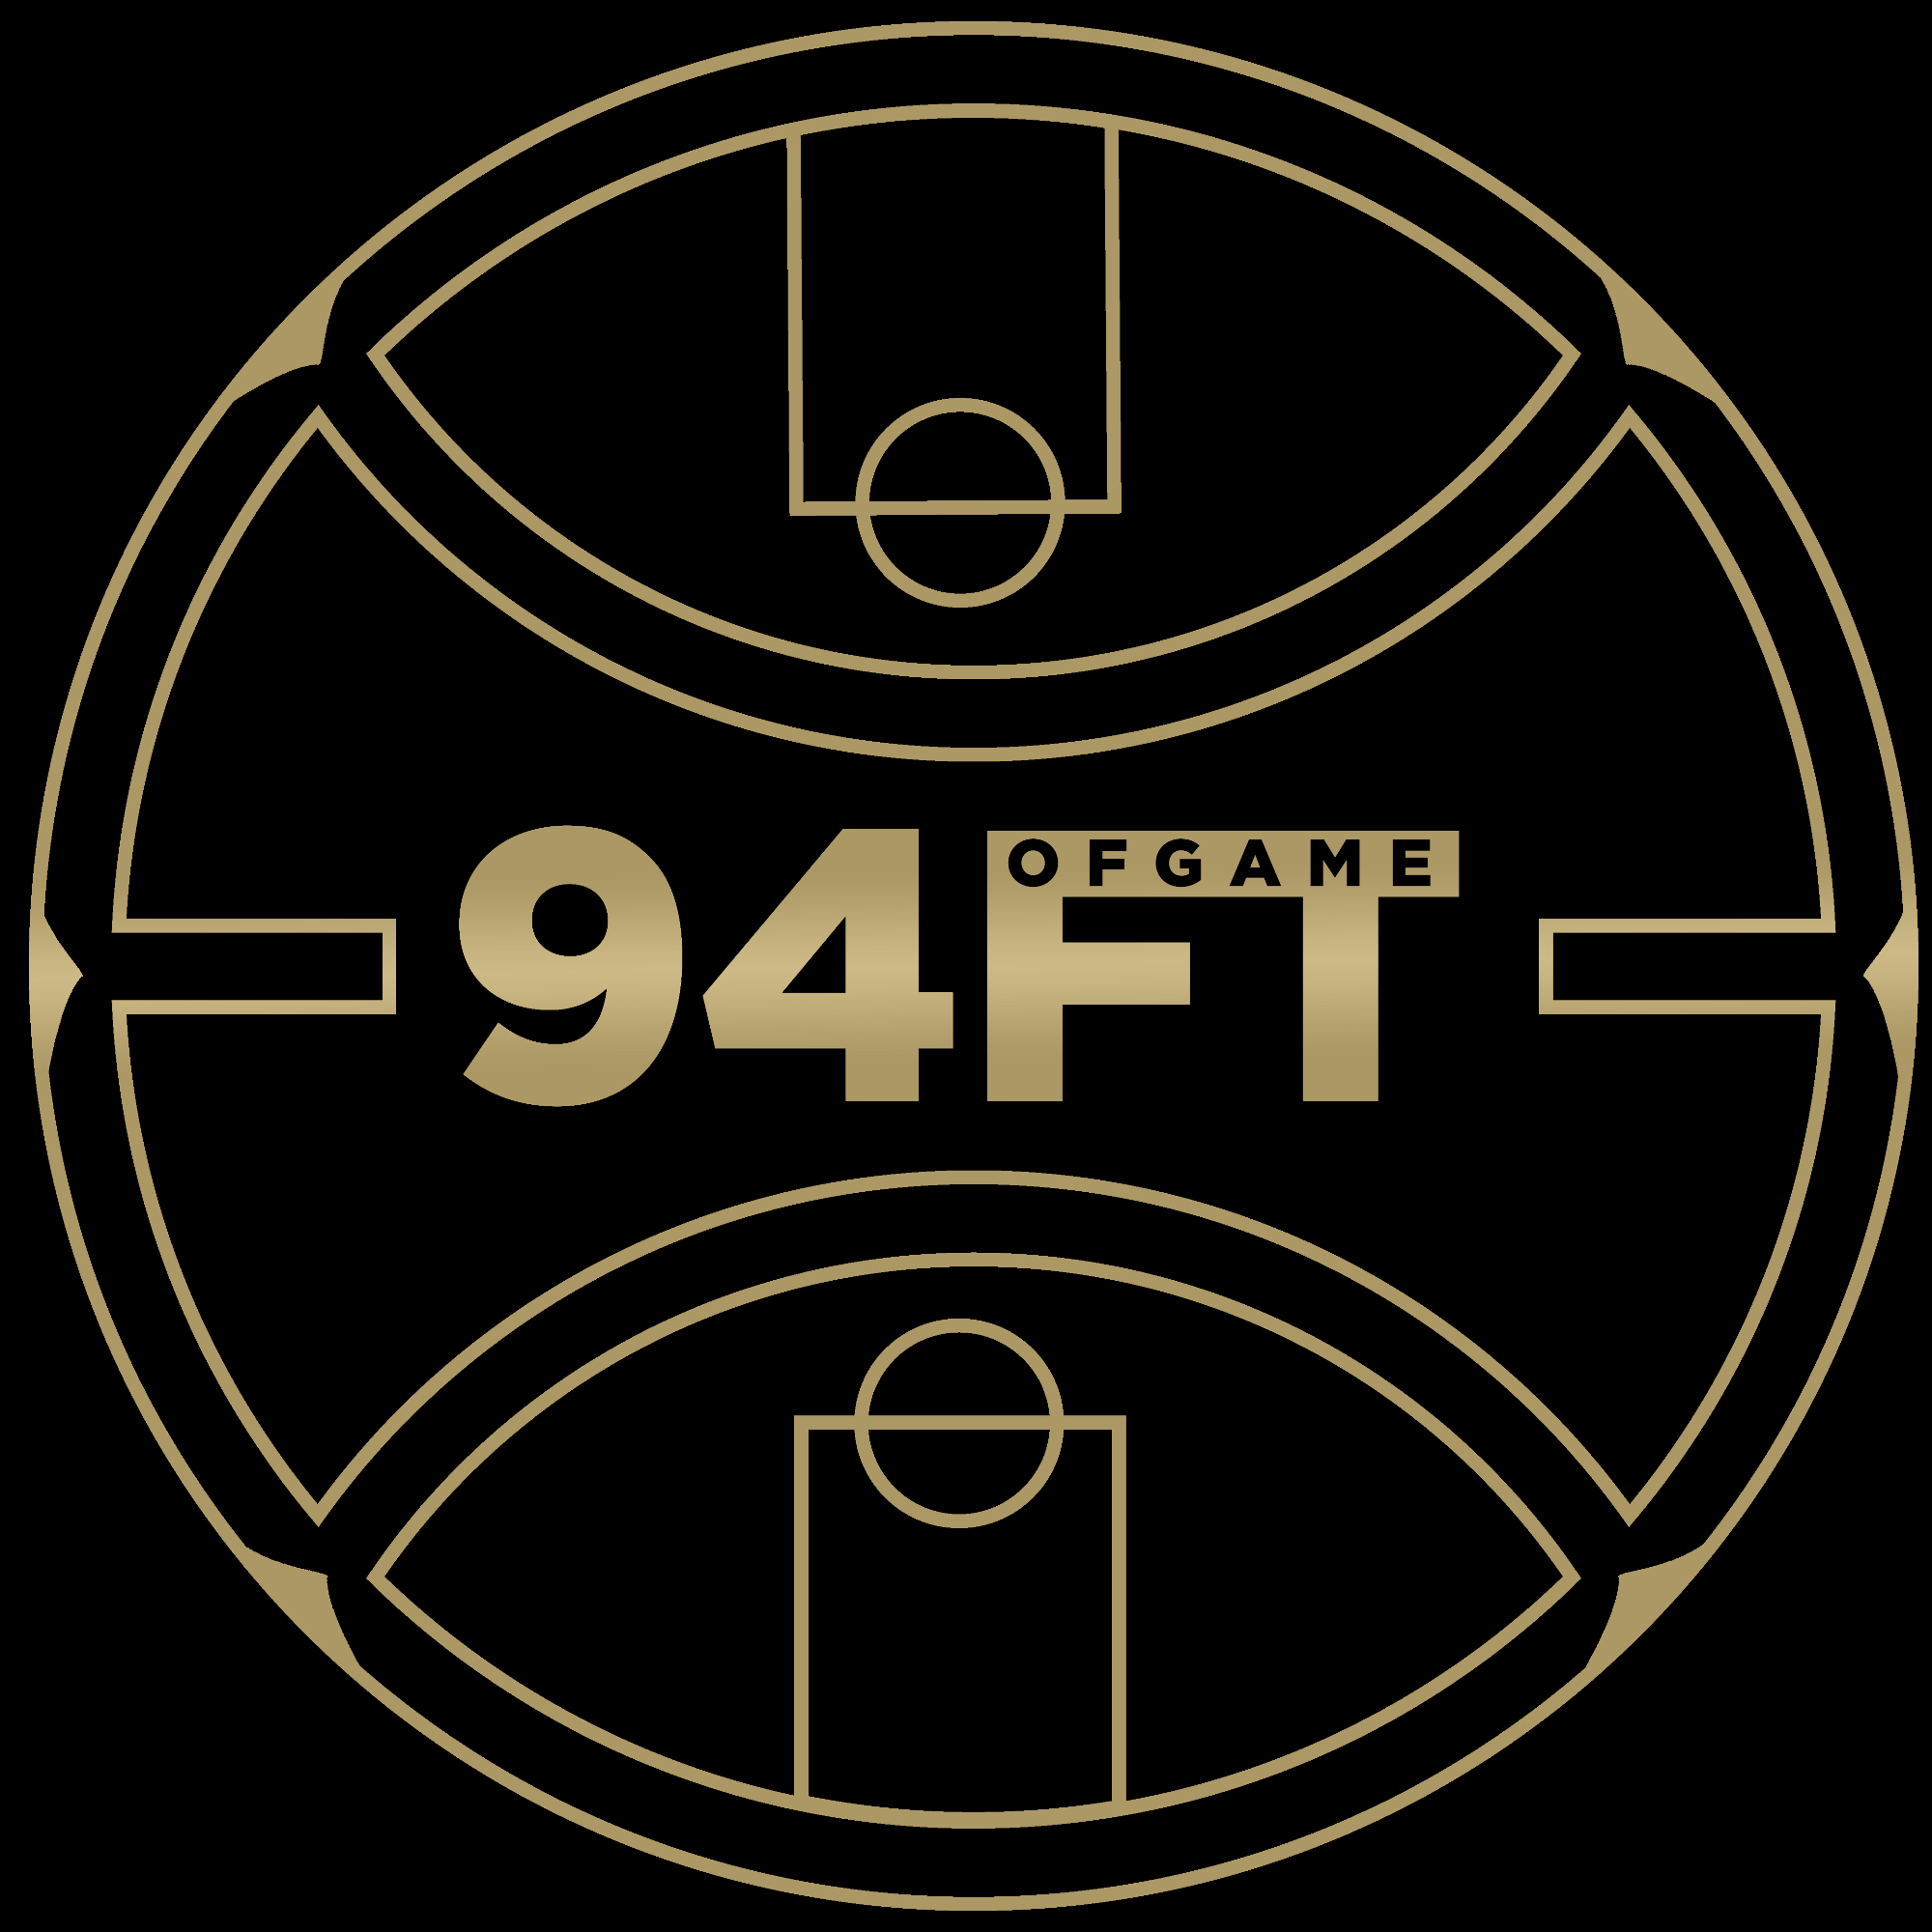 Organization logo for Team 94FEETOFGAME